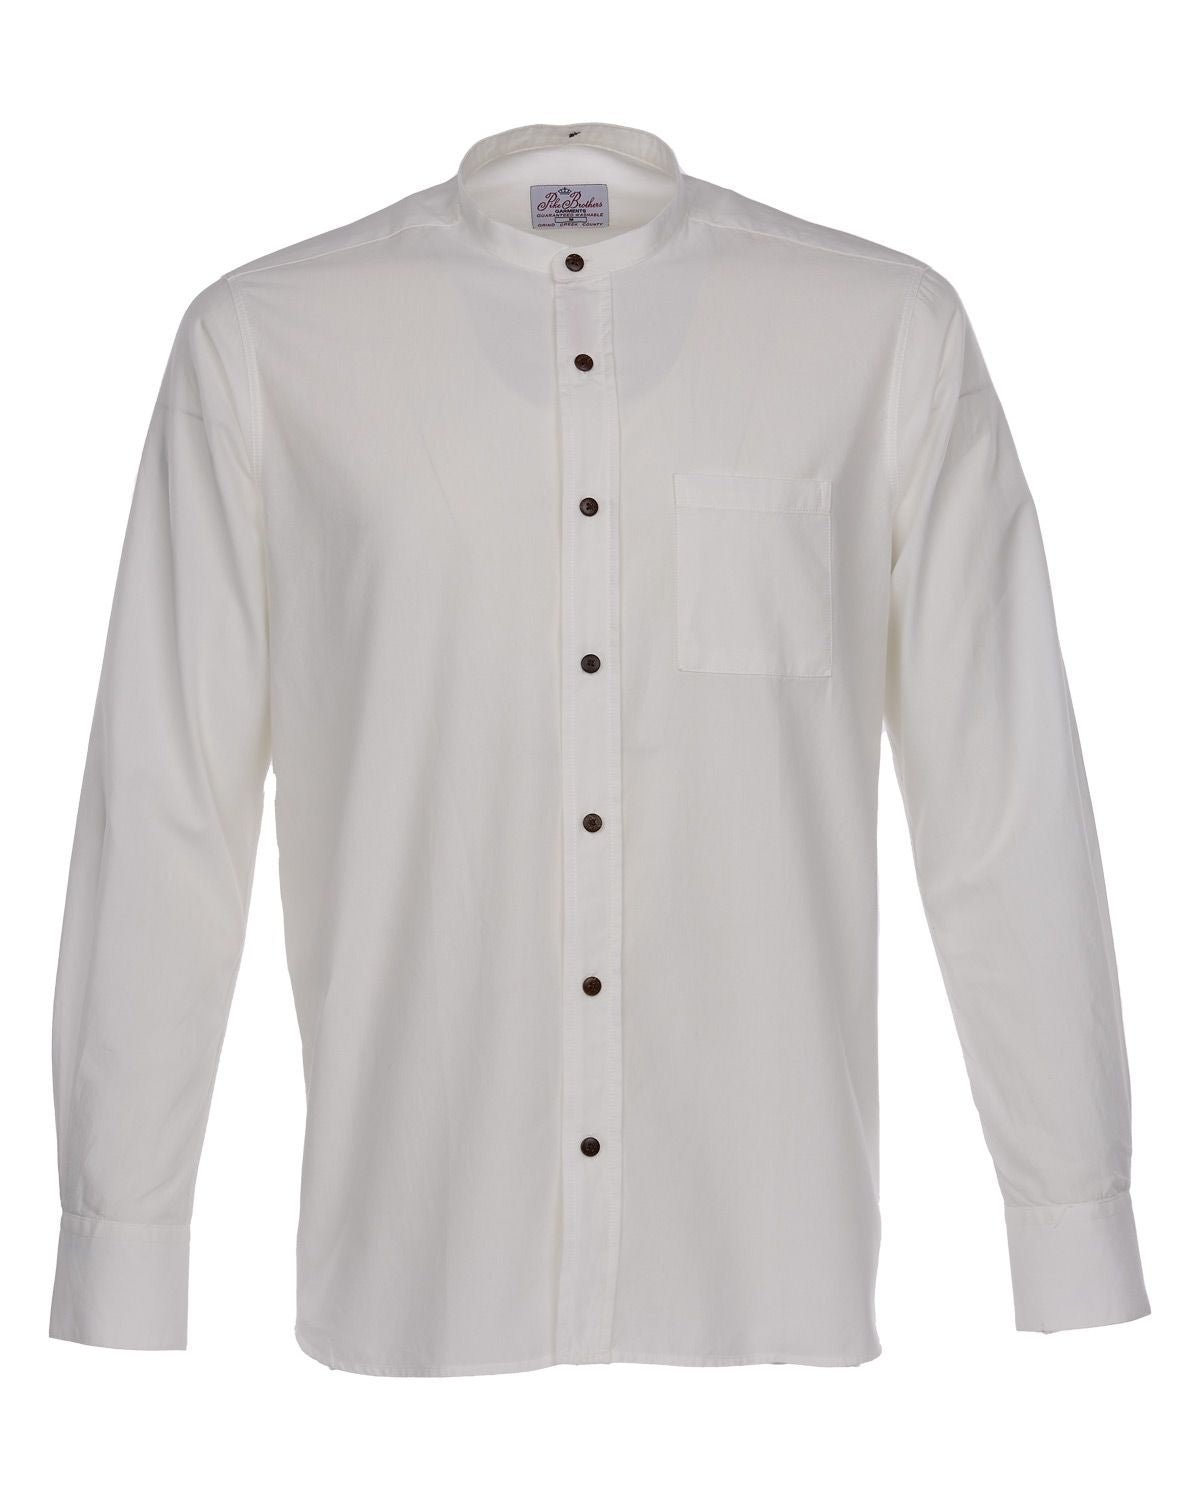 1923 Buccanoy Shirt - white chambrey